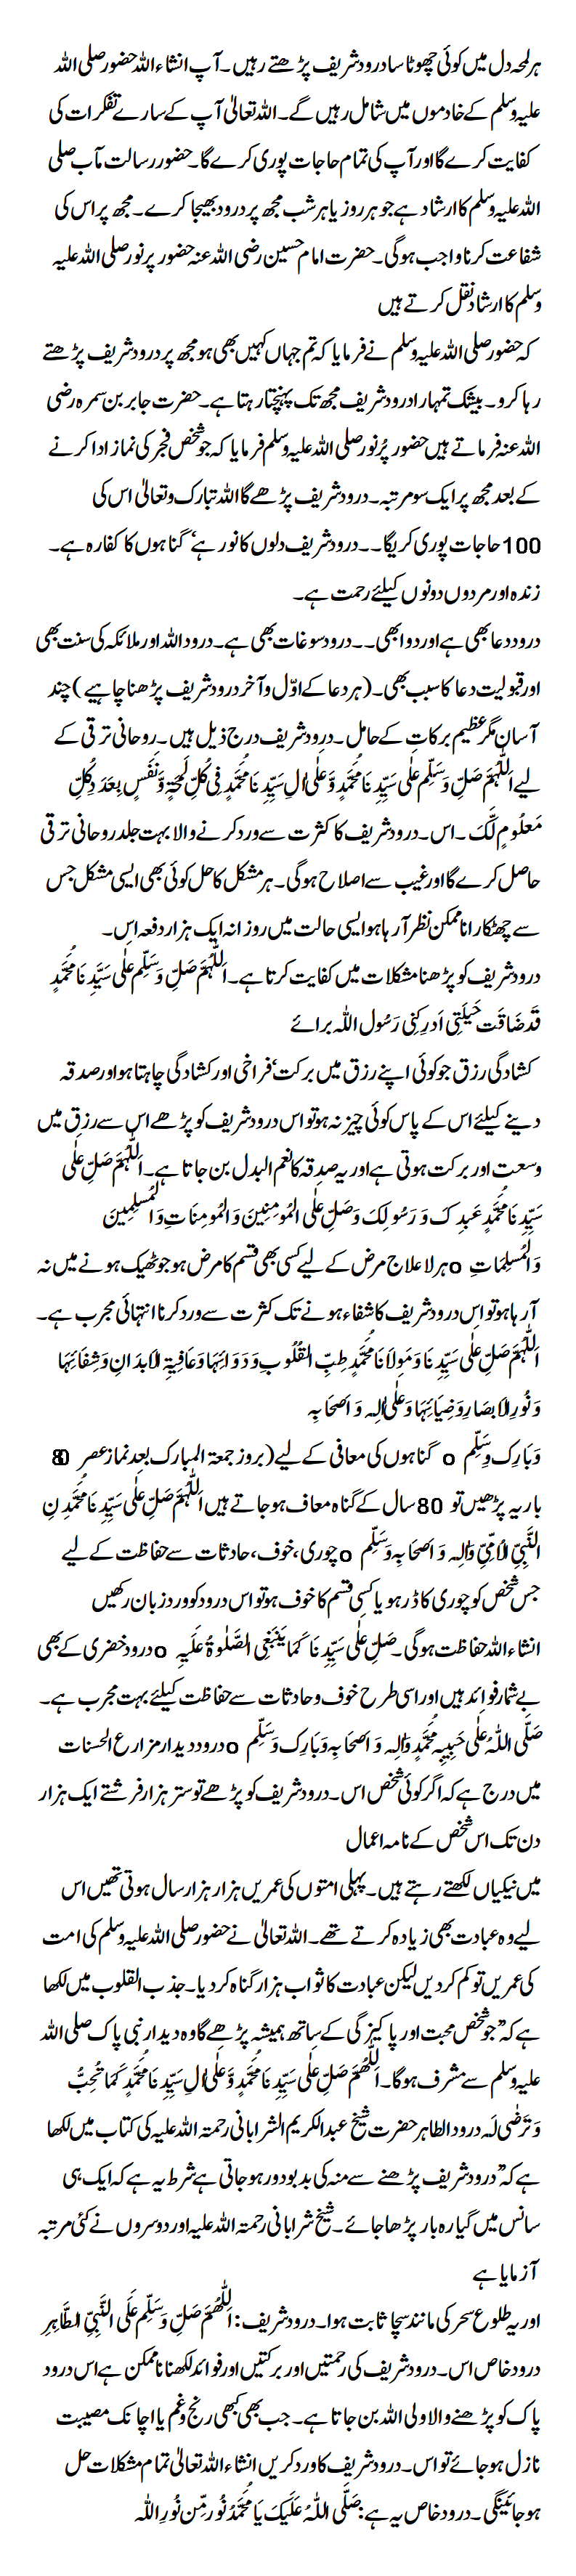 Benefits of reciting Durood Pak